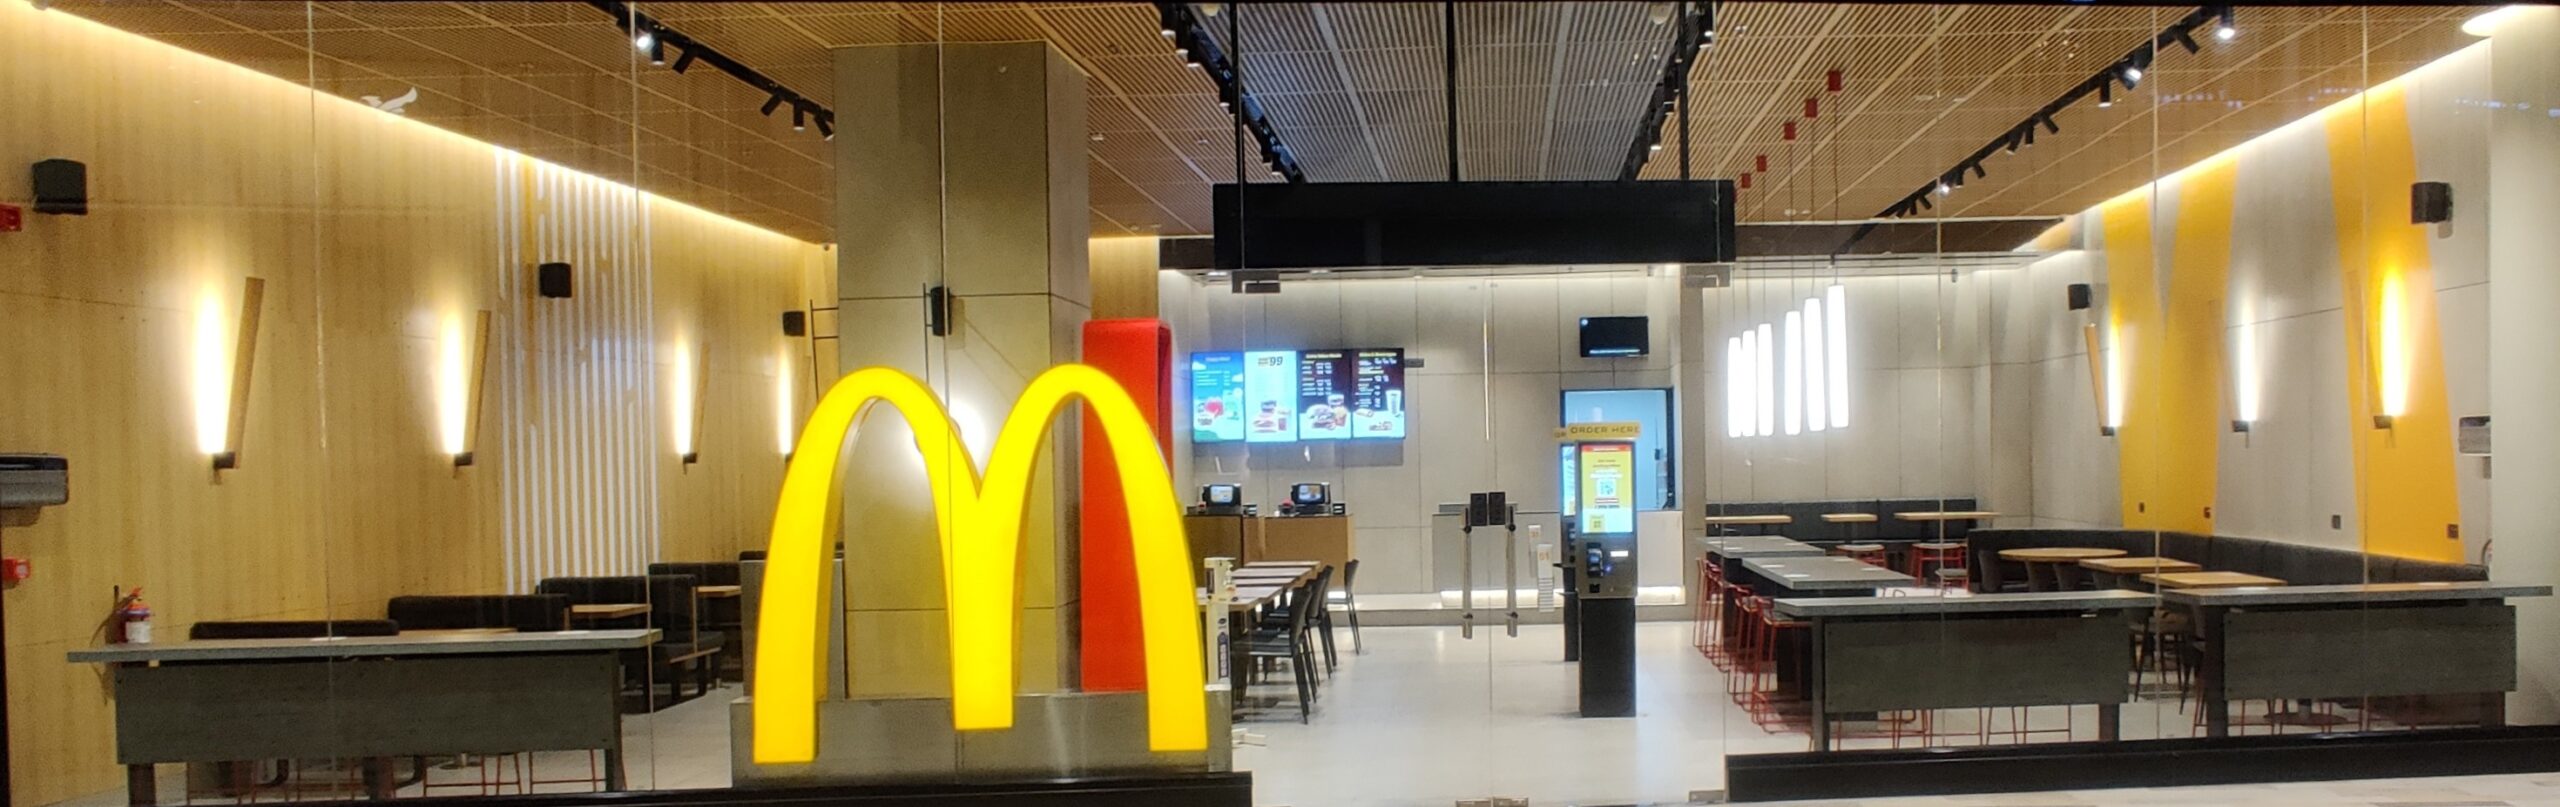 McDonald’s India North & East embarks on Restaurant Modernization